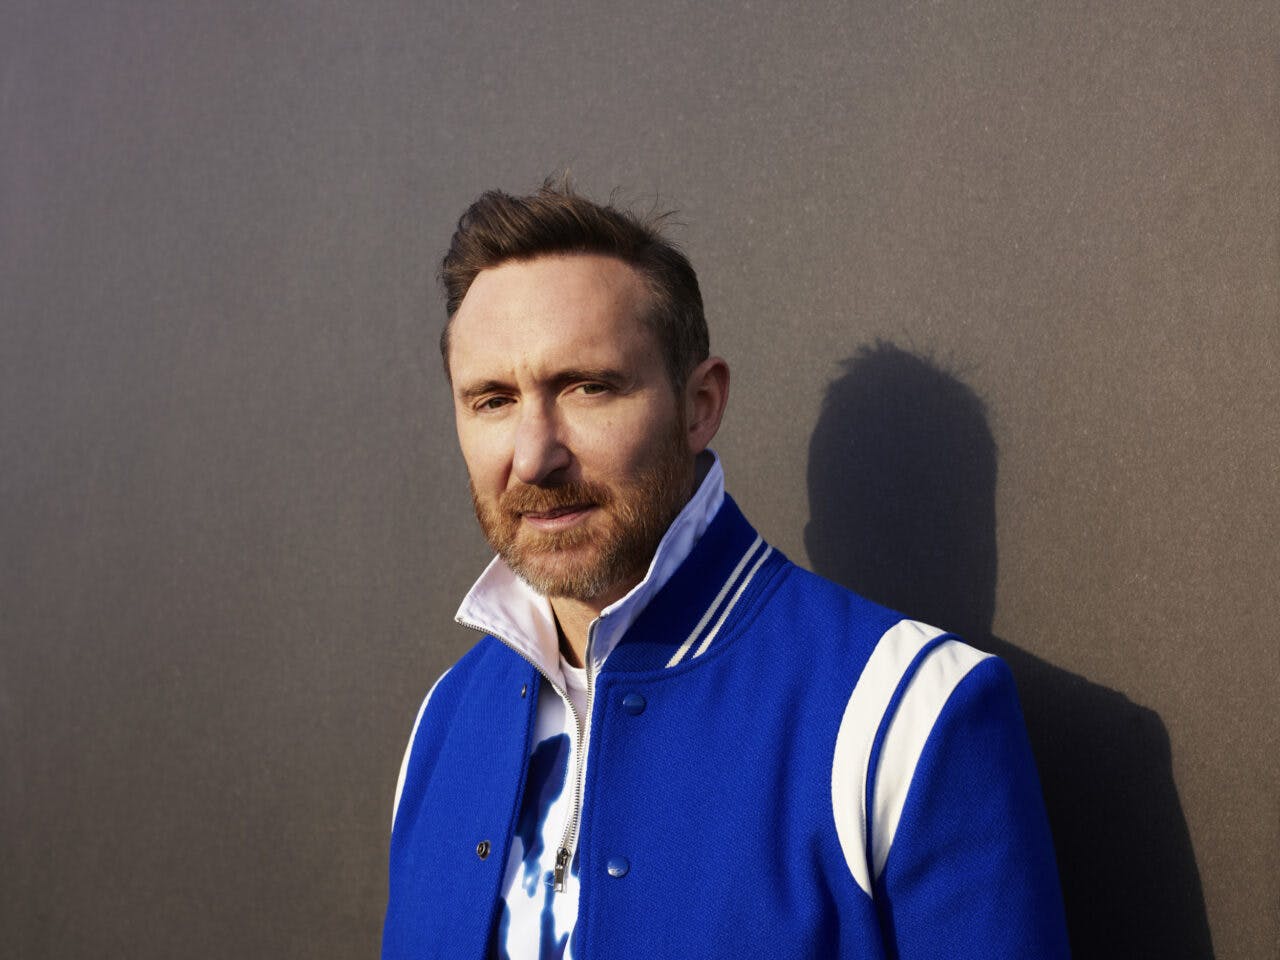 David Guetta erobert Platz 4 der meistgestreamten Spotify-Künstler